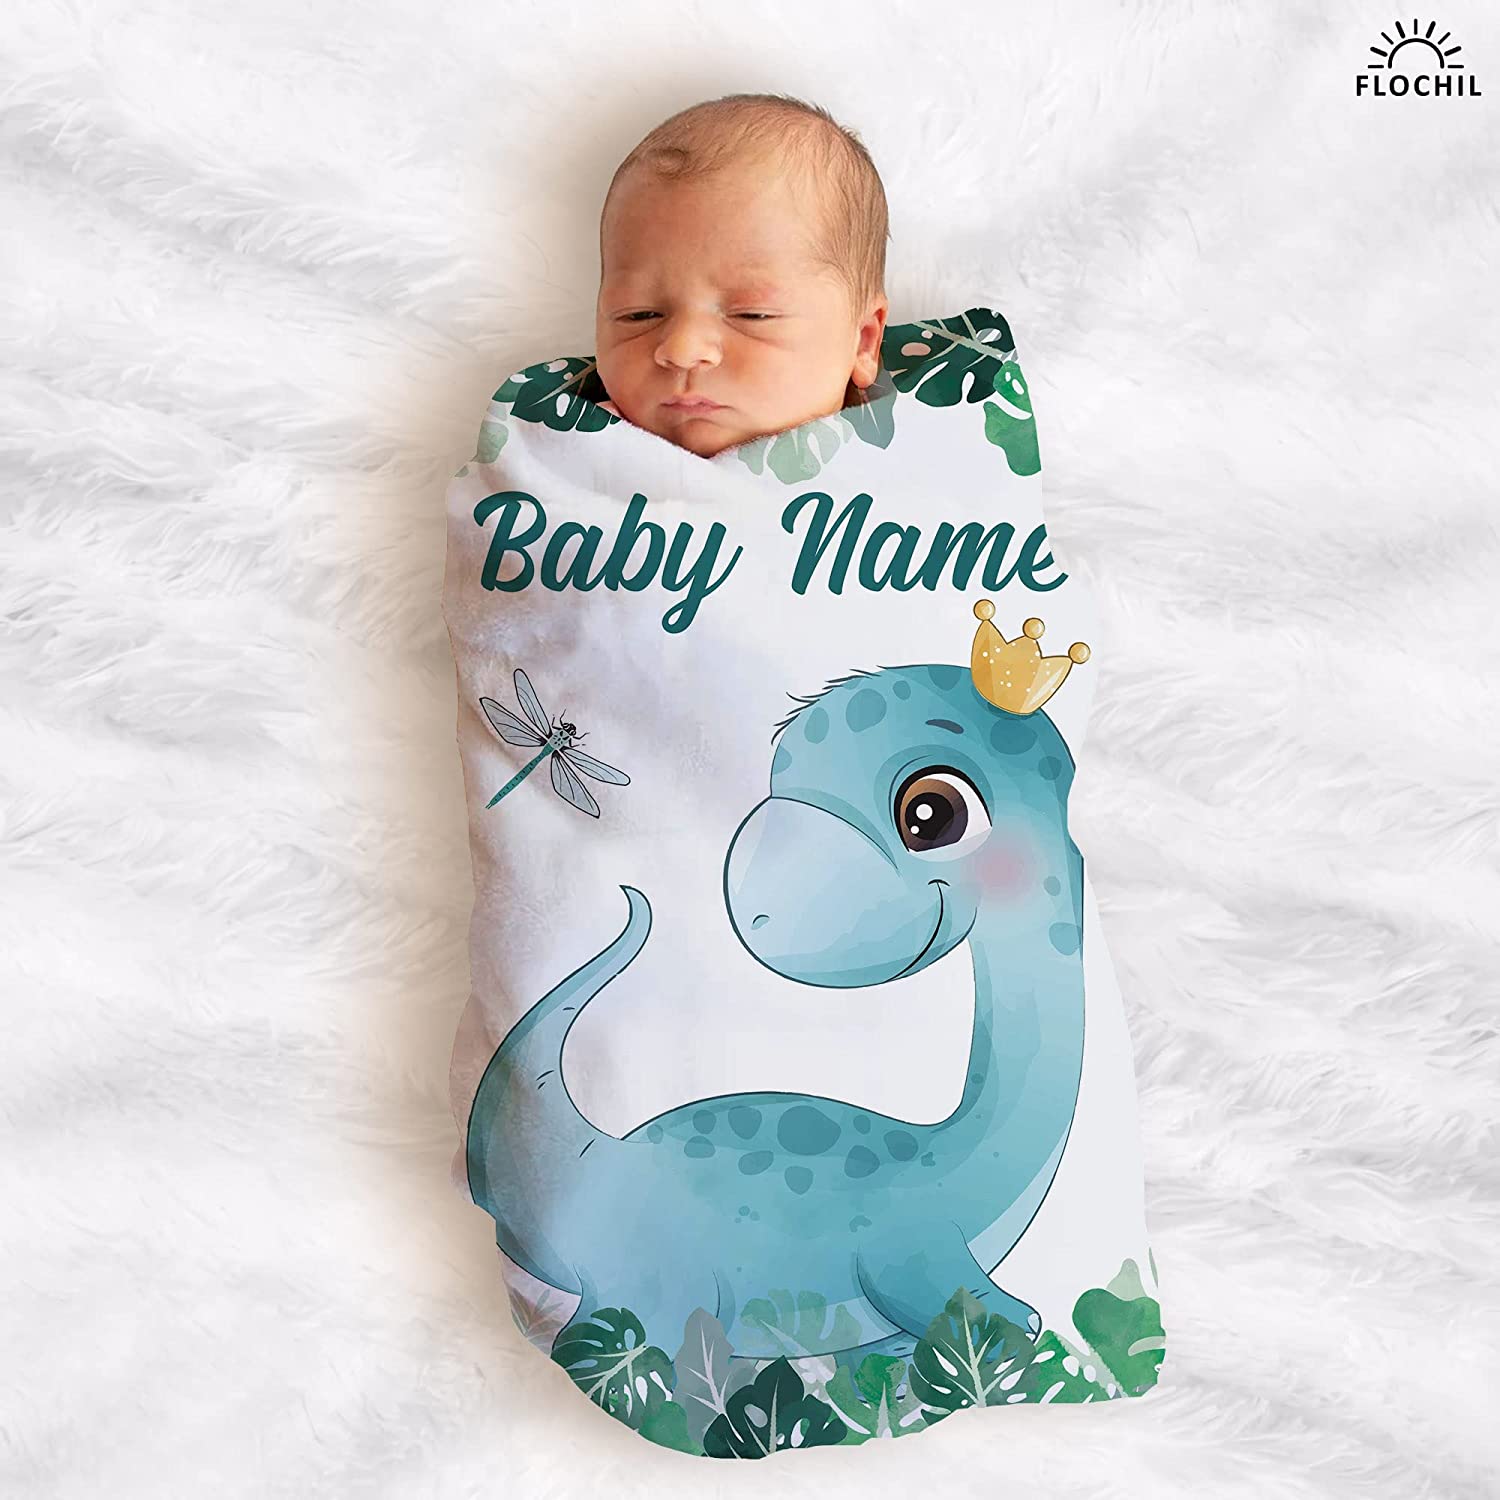 Personalized Baby Blankets, Custom Baby Blanket - Baby Blanket with Name for Boys, Best Gift for Baby, Newborn Dinosaur Flush Fleece